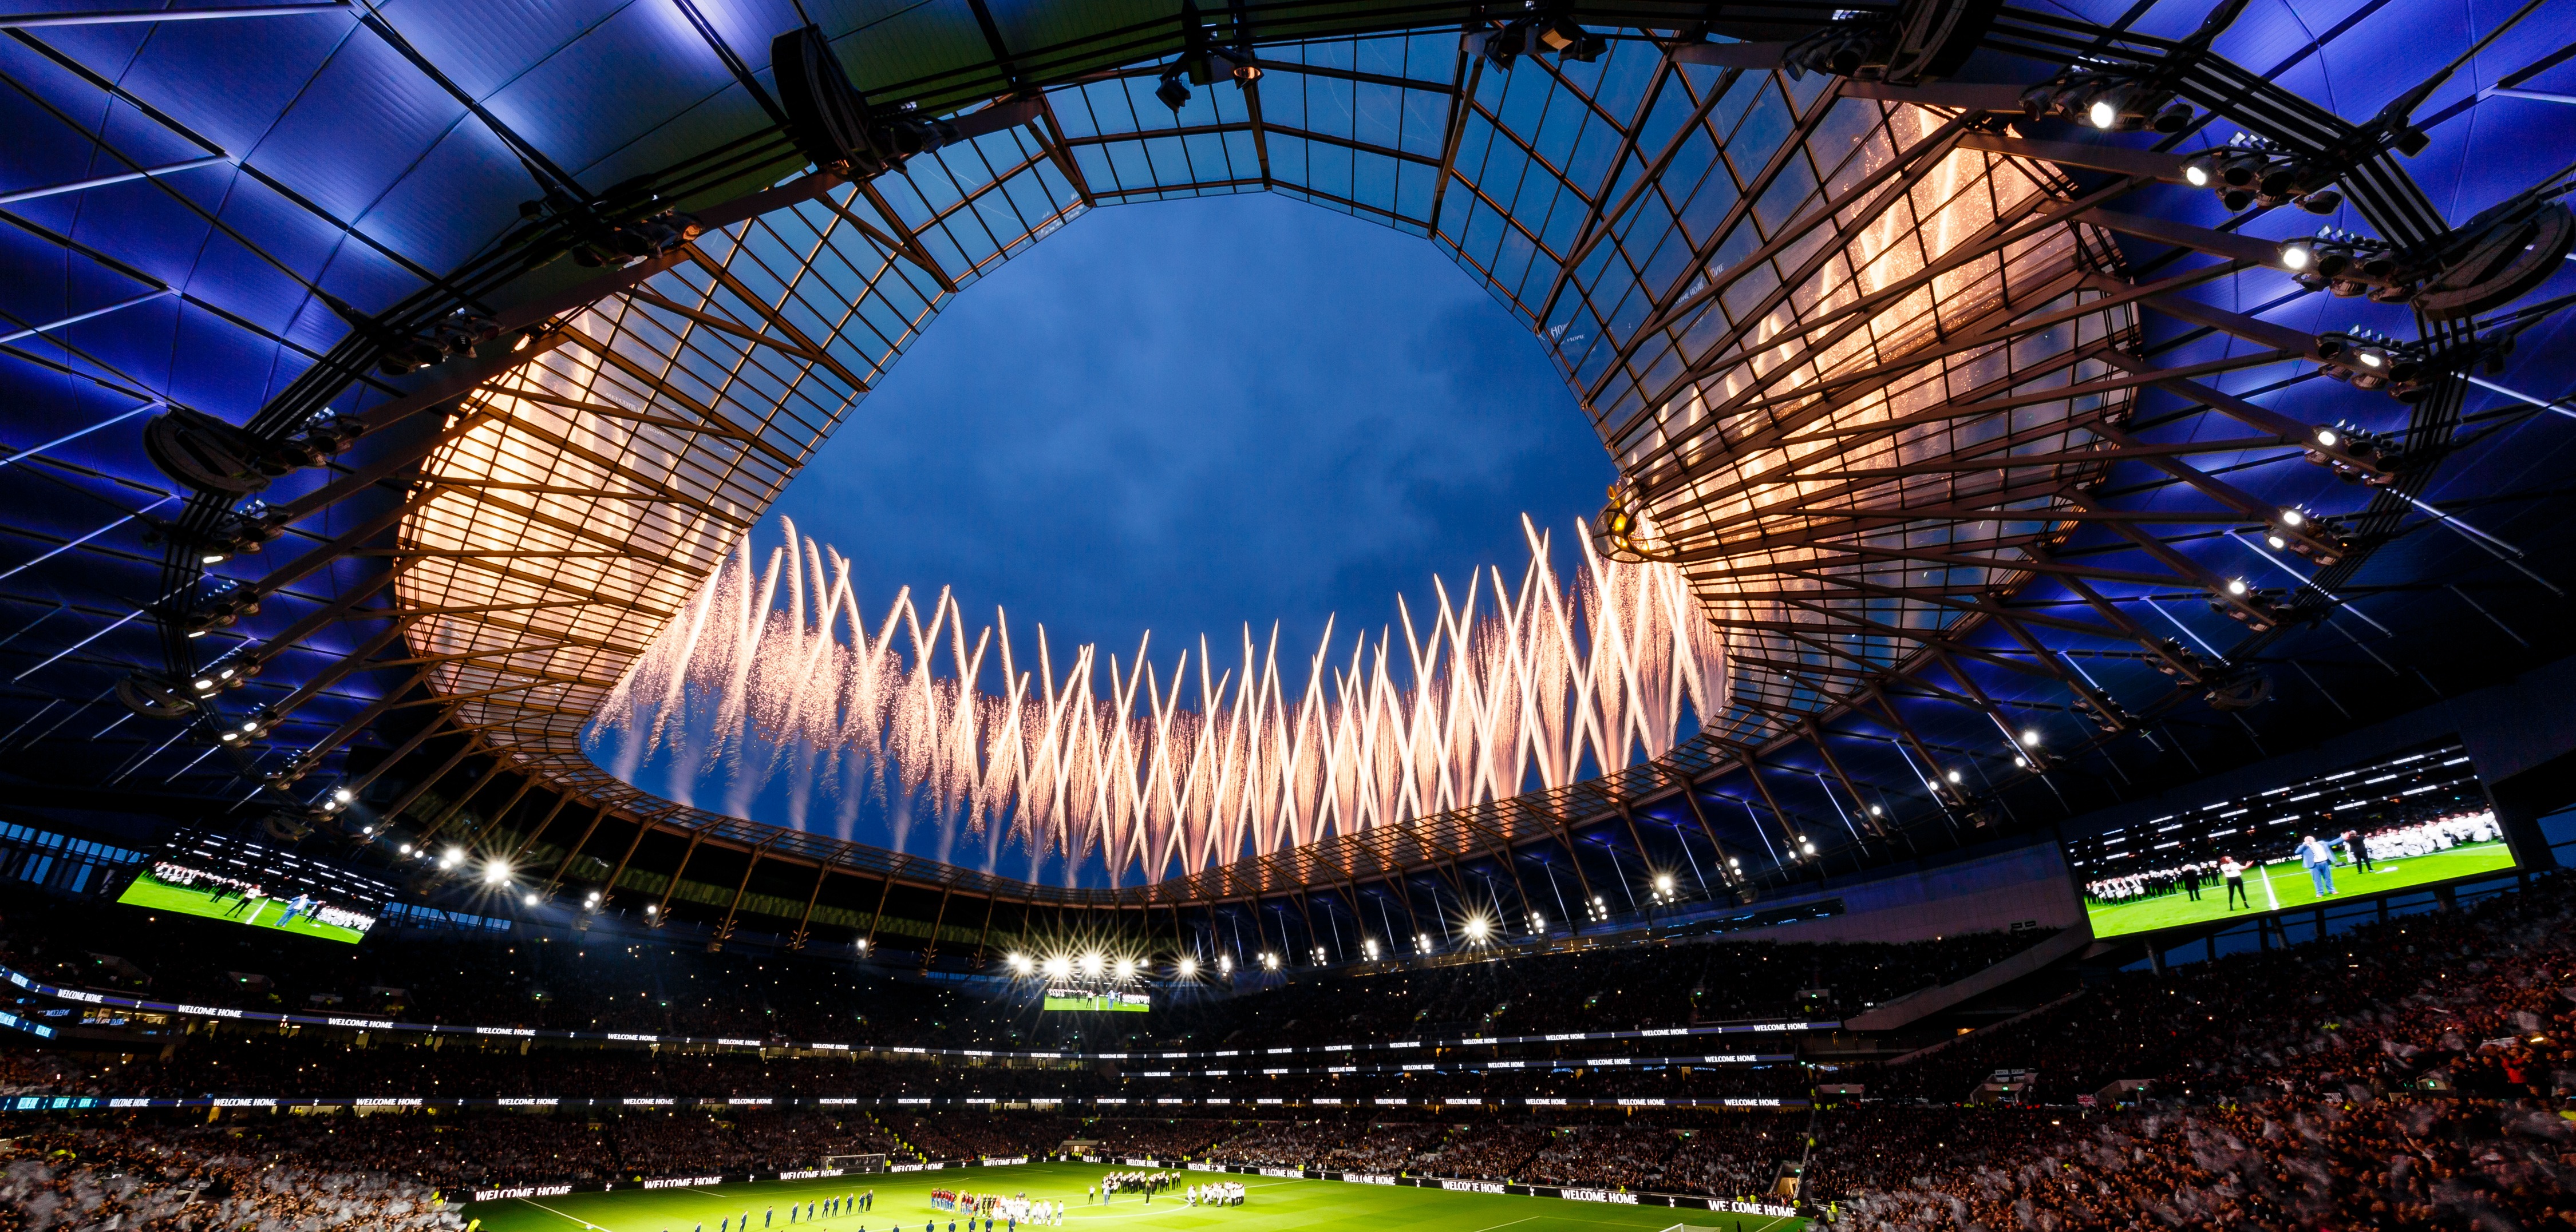 Tottenham Hotspur Stadium Ranked Best Soccer Venue In The World Stadia Magazine